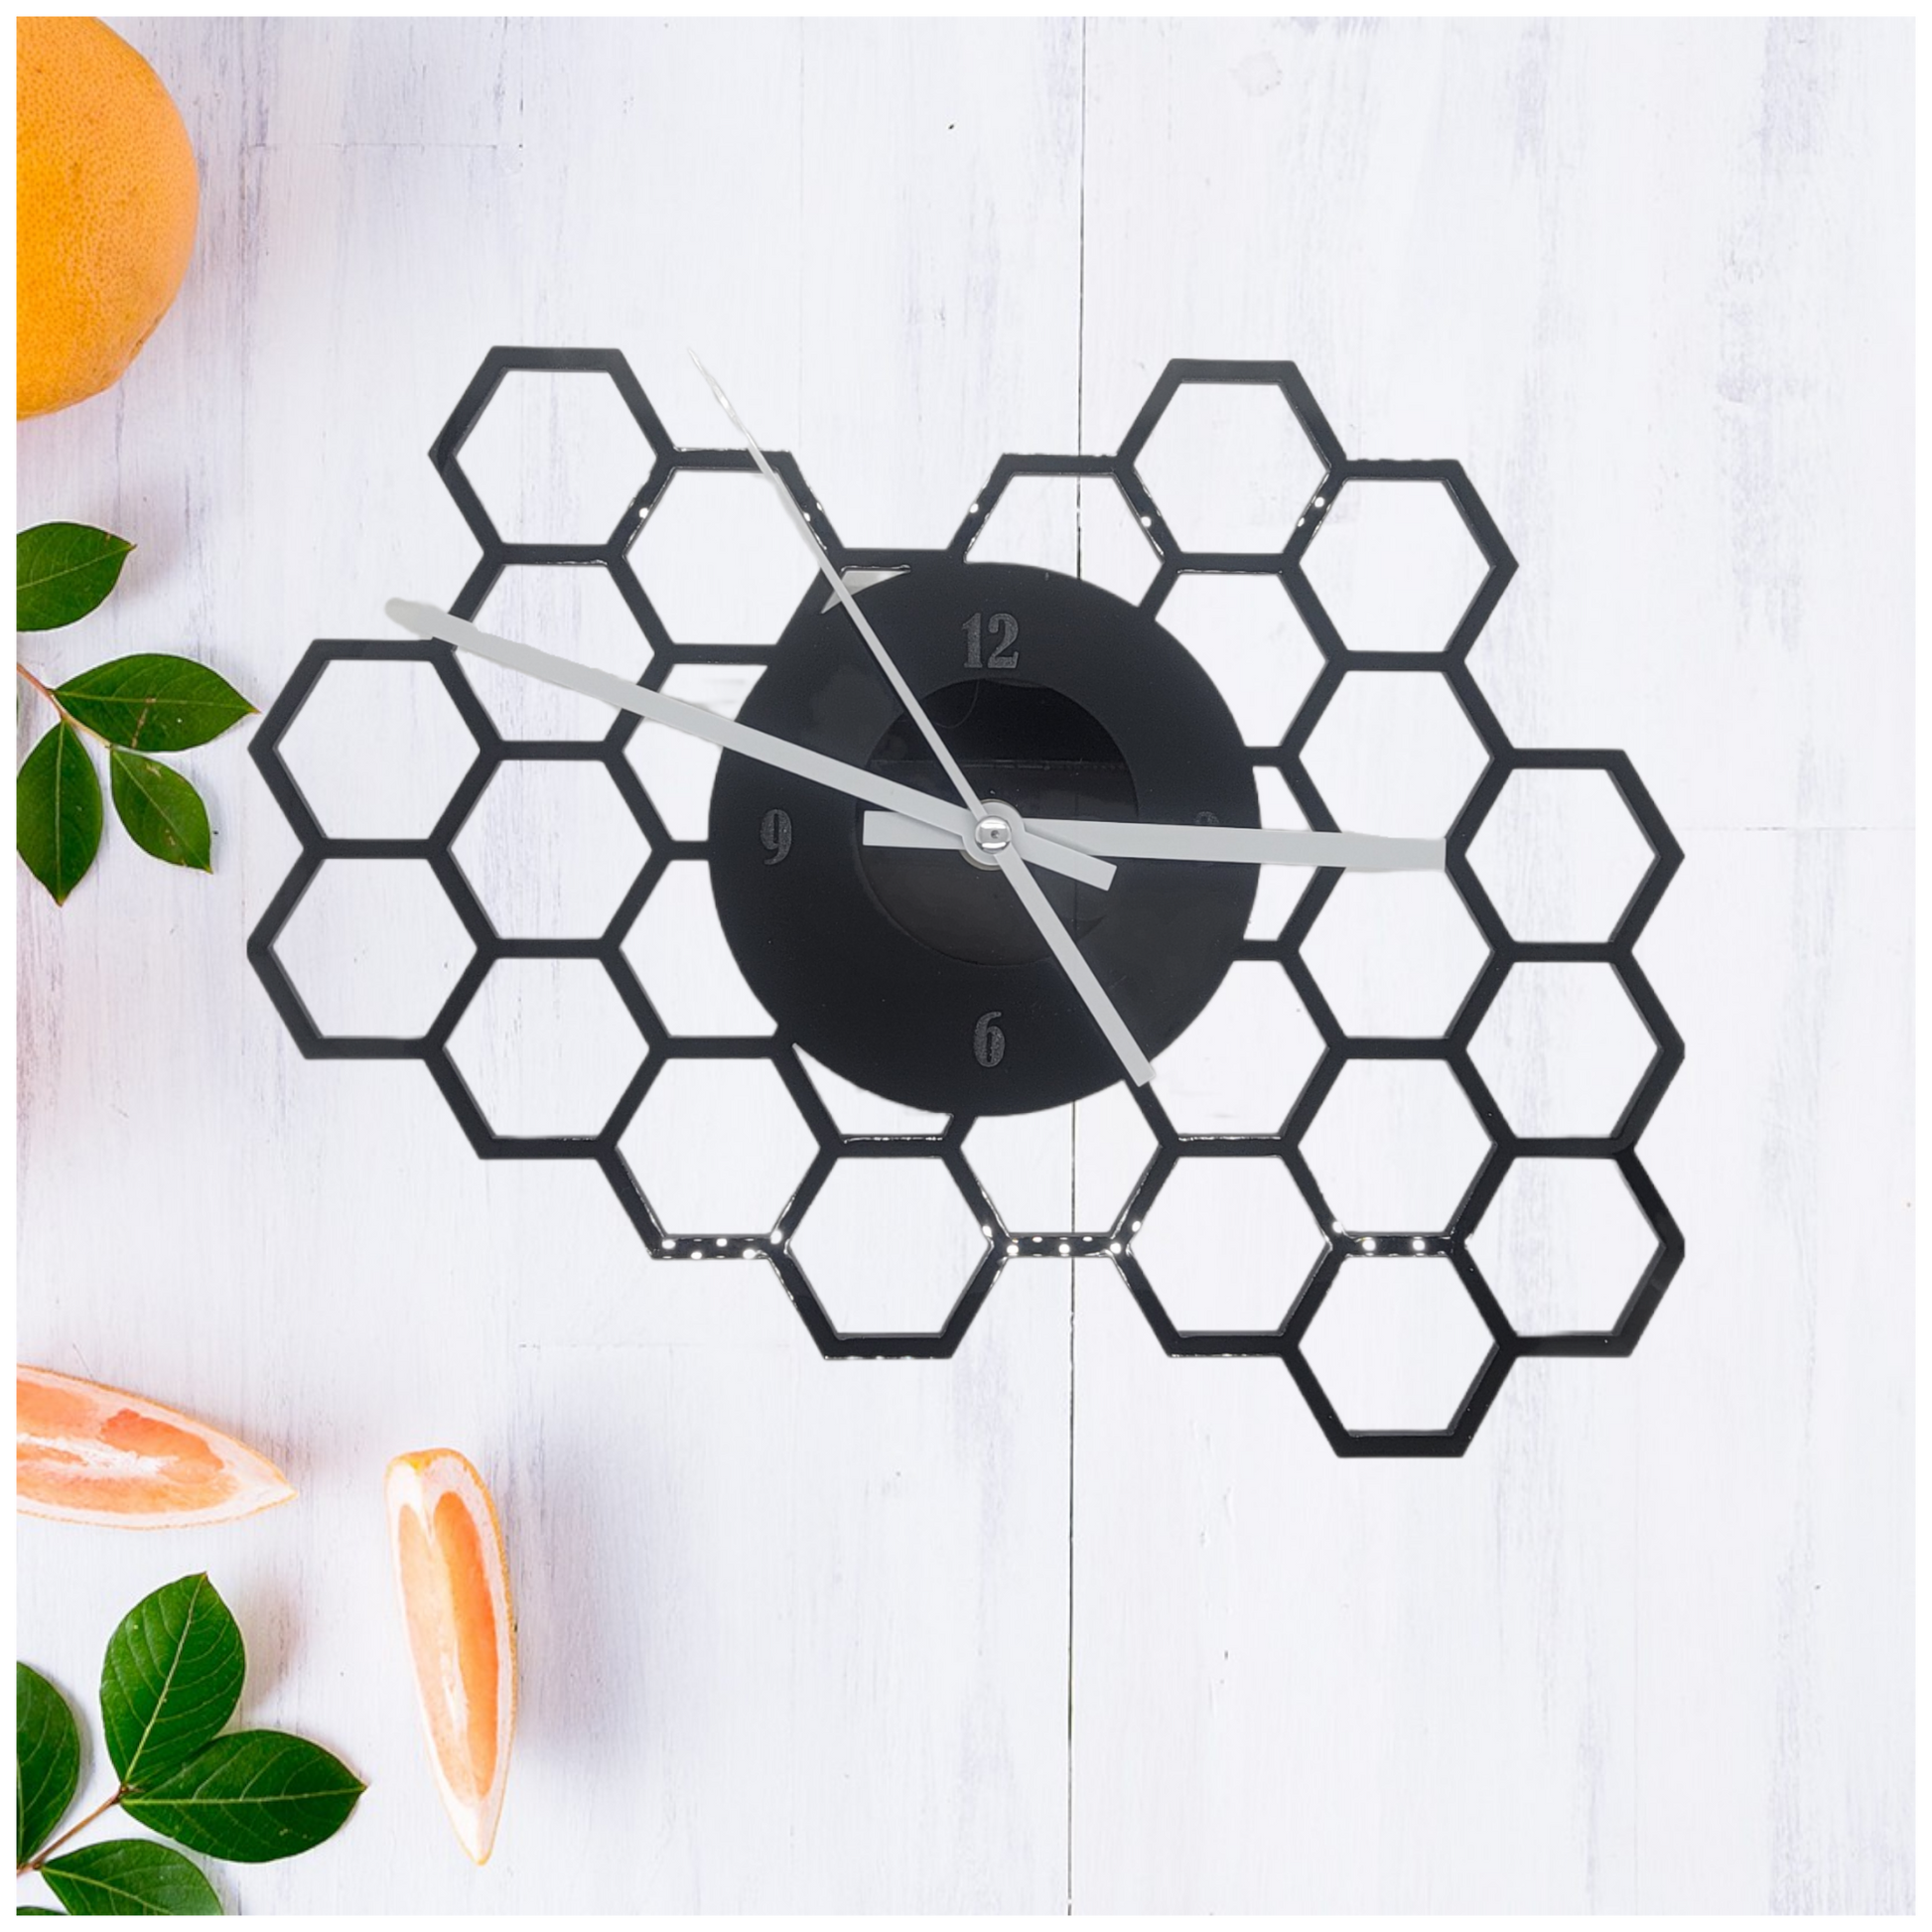 Clock Yellow Honeycomb Personalized Wall Clock | Jones Laser Craft Personalized Gift